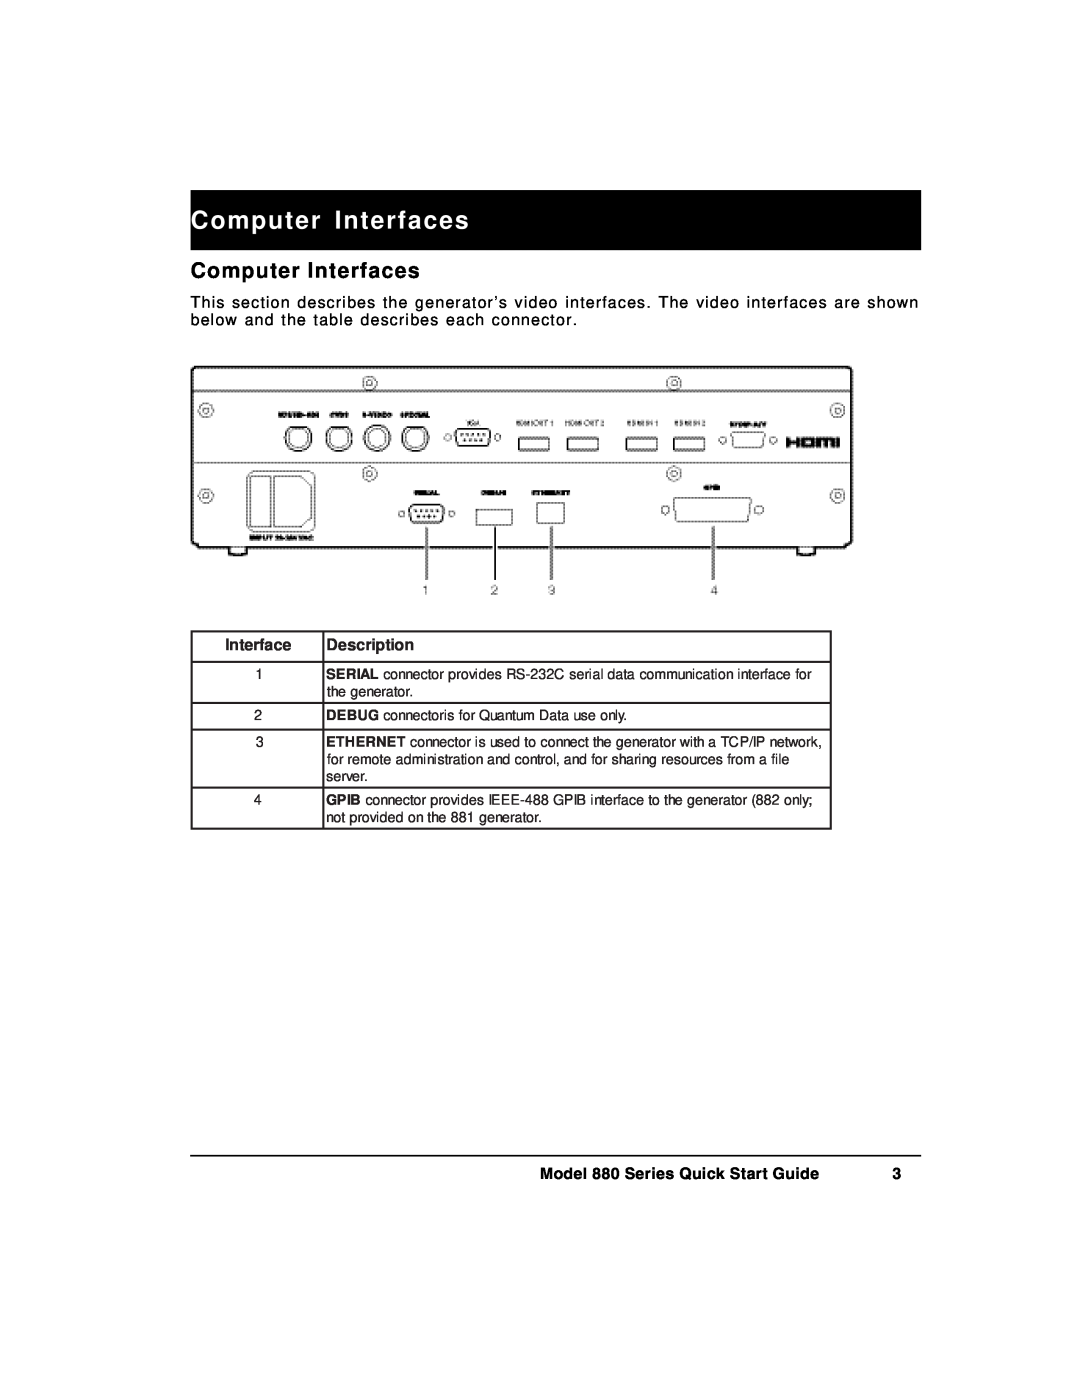 Quantum Data quick start Computer Interfaces, Description, Model 880 Series Quick Start Guide 